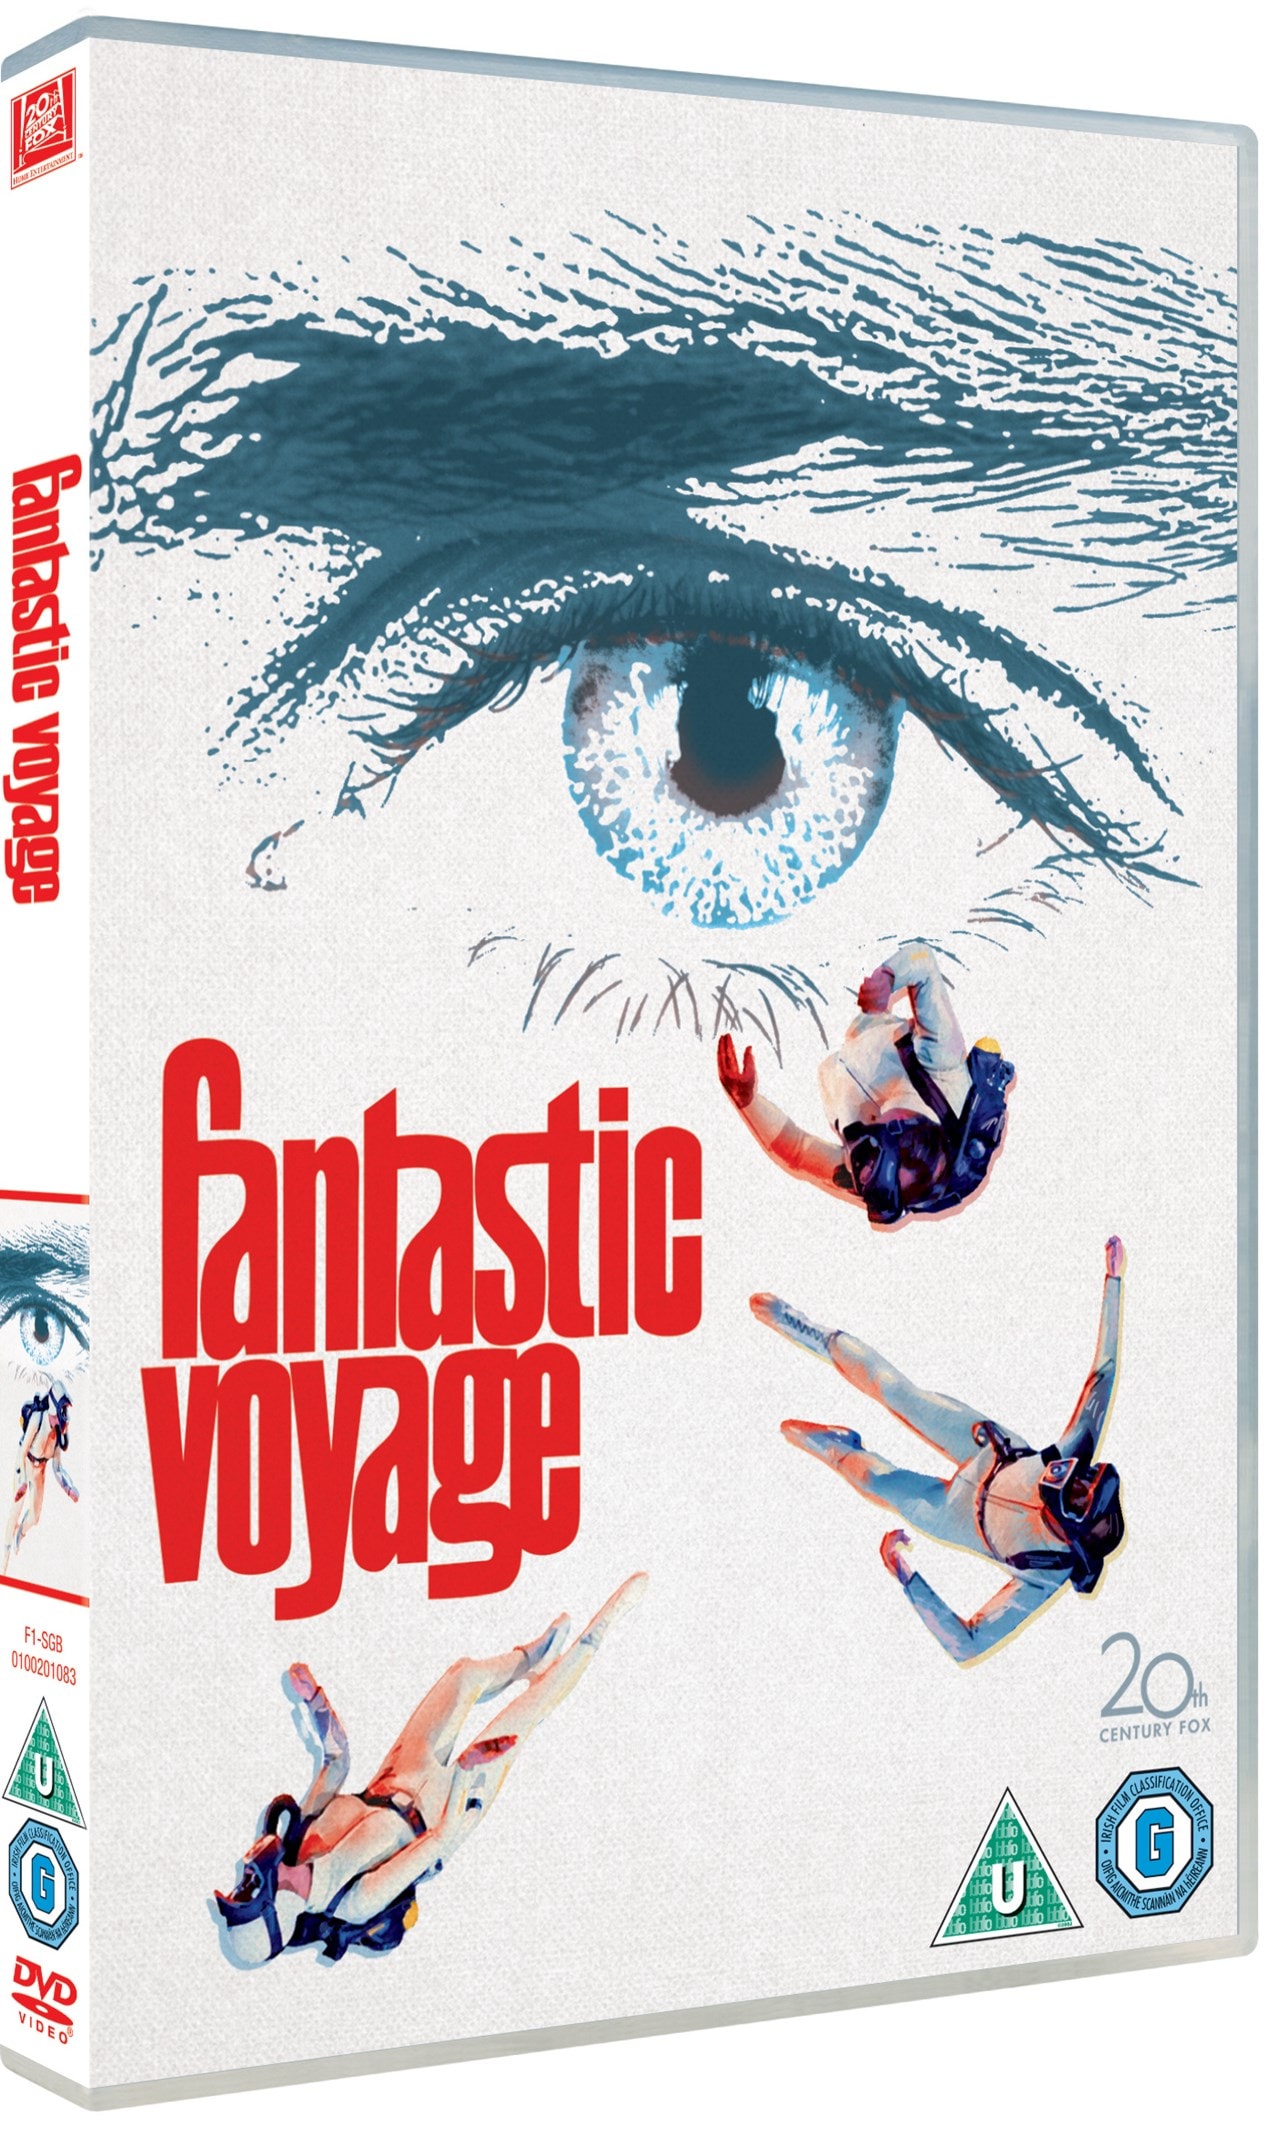 fantastic voyage 1966 dvd